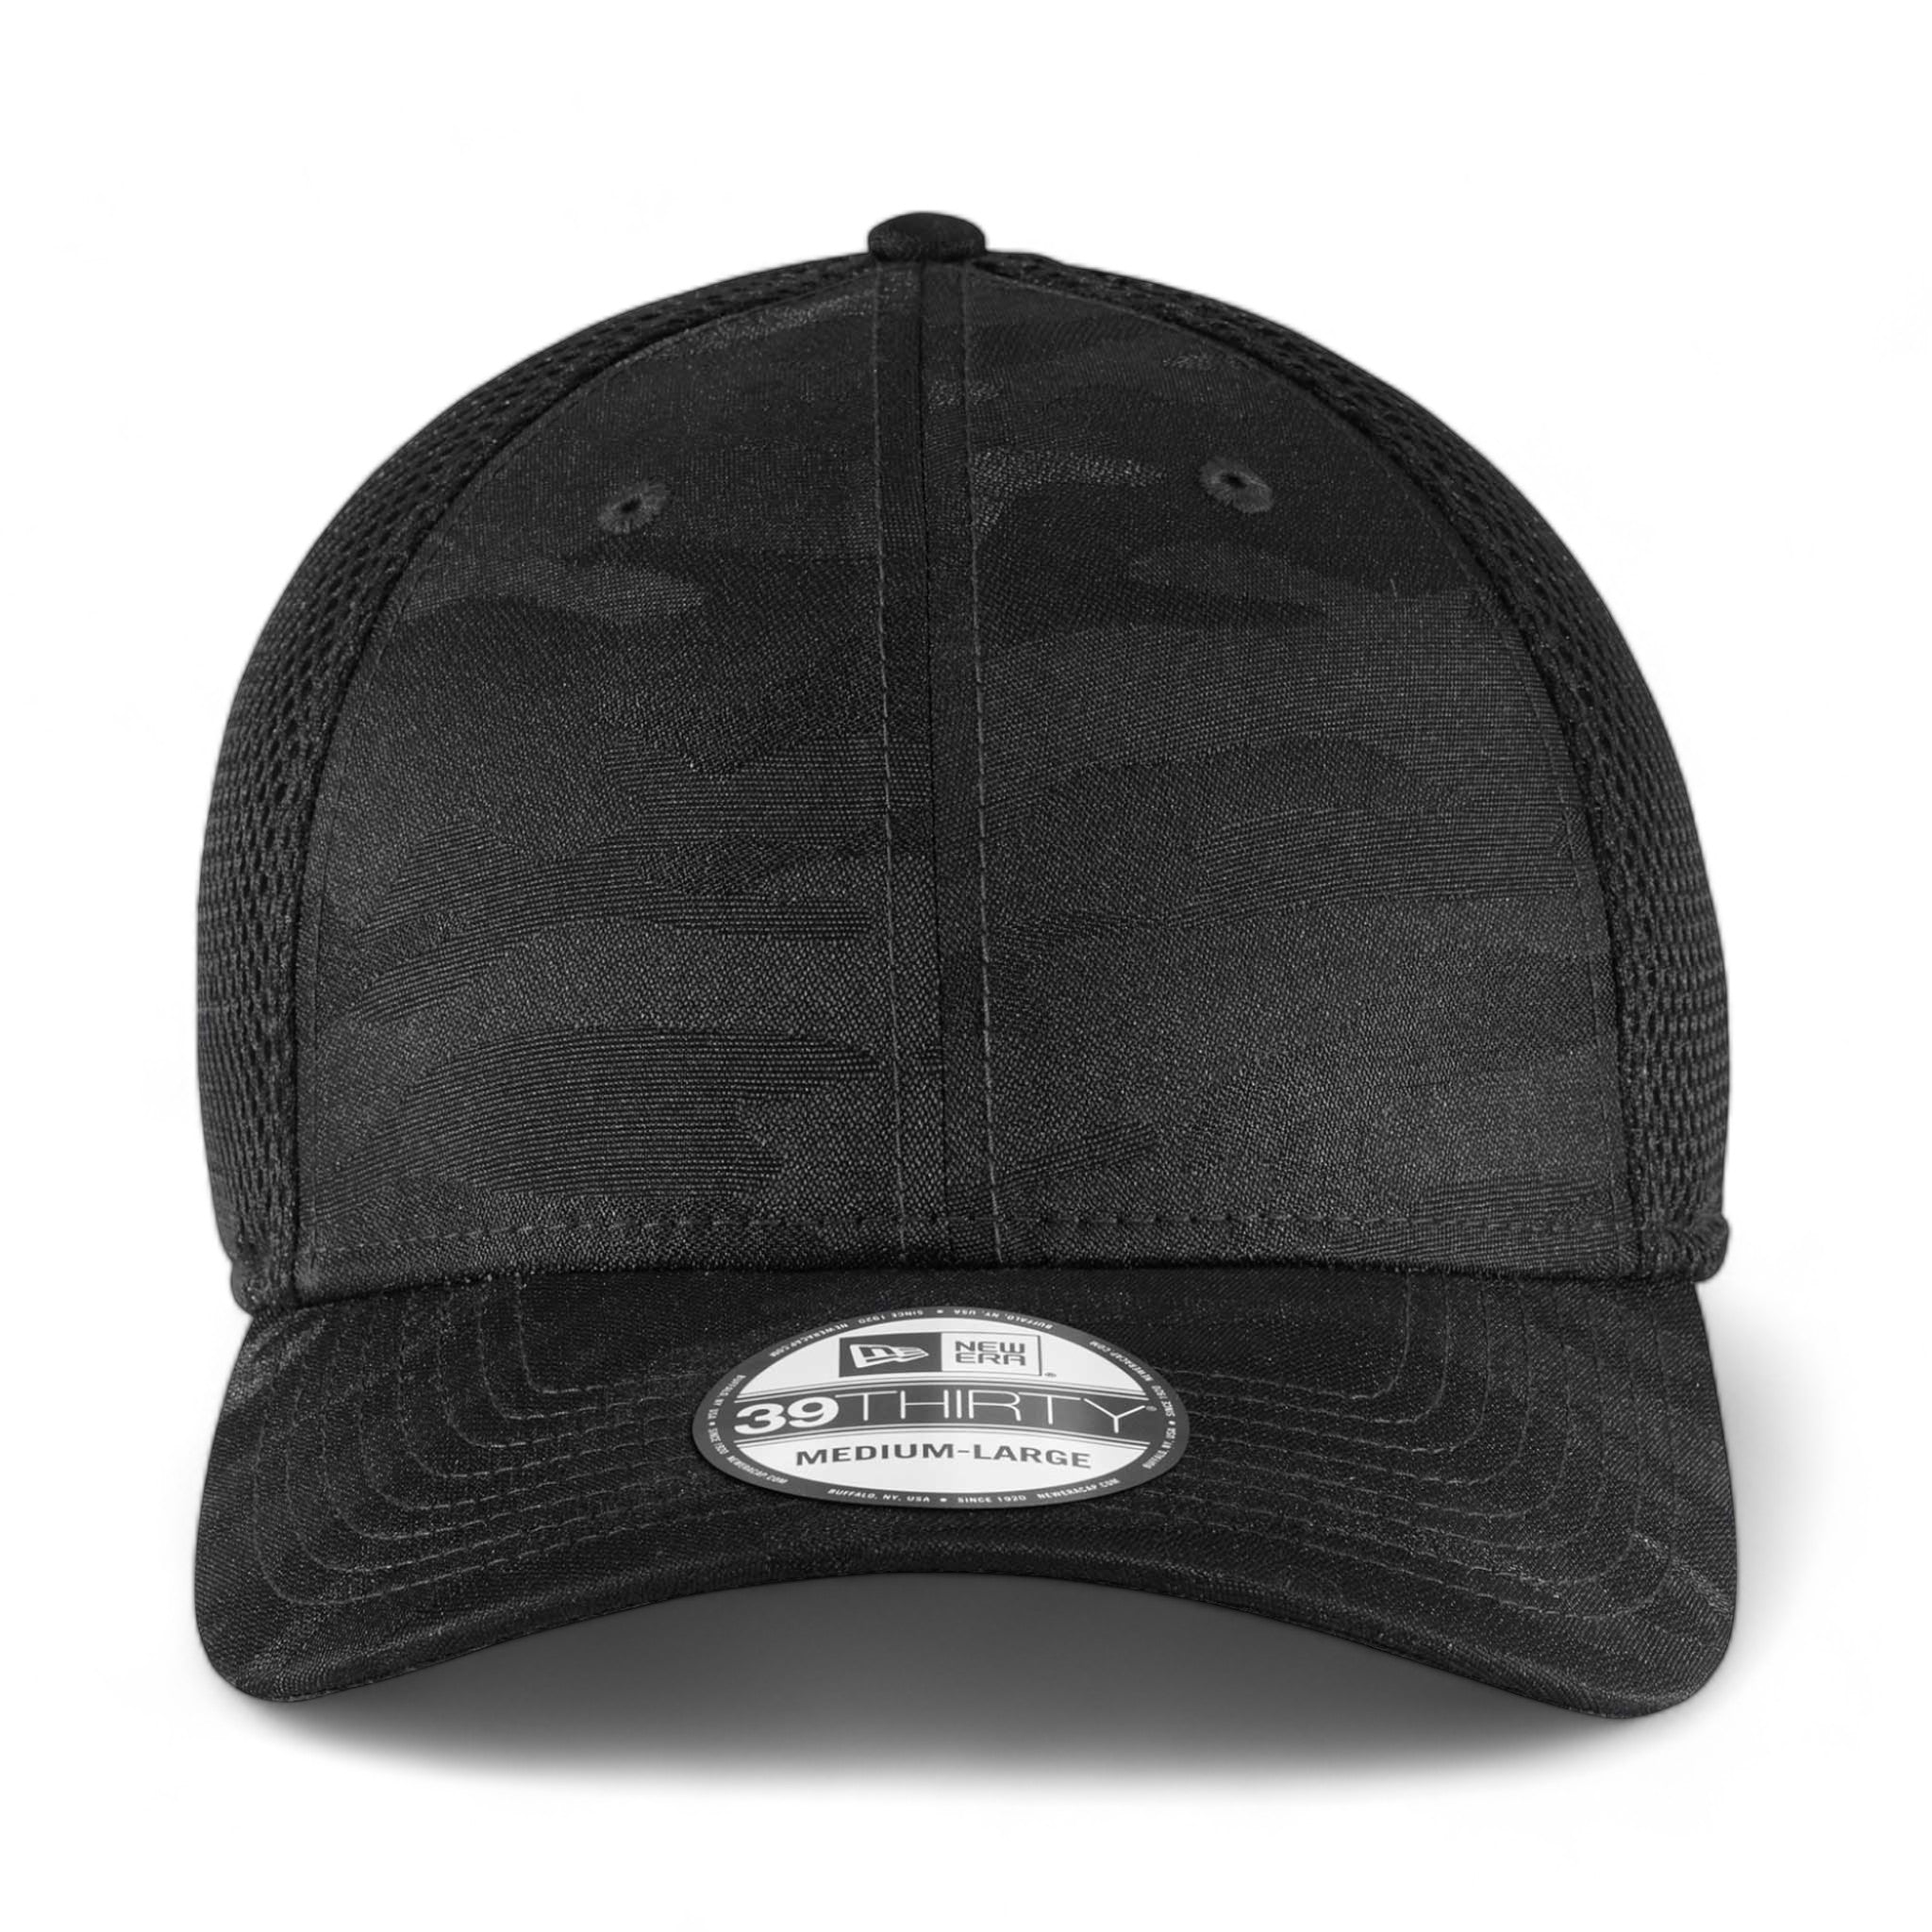 Front view of New Era NE1091 custom hat in black camo